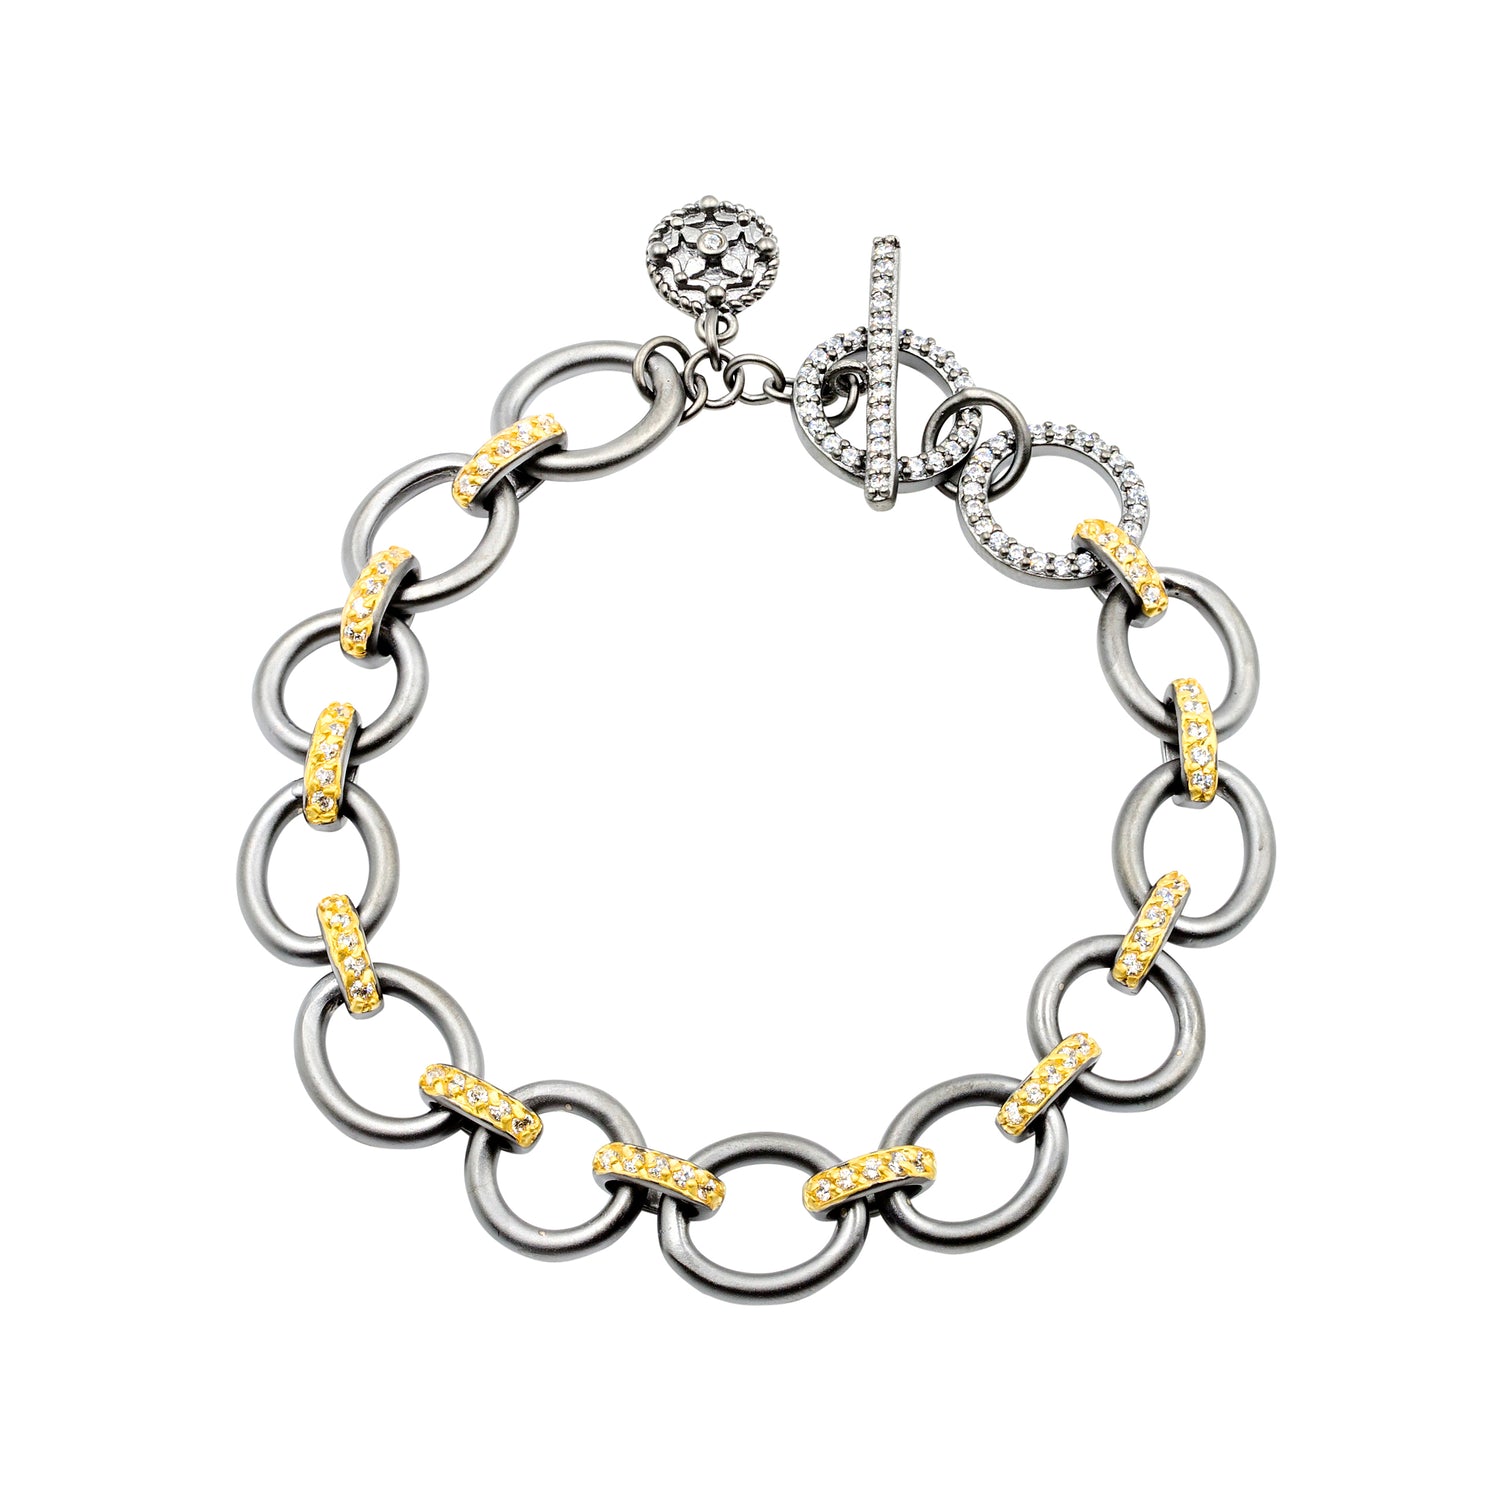 Freida Rothman Freida Rothman - Signature Link Bracelet available at The Good Life Boutique